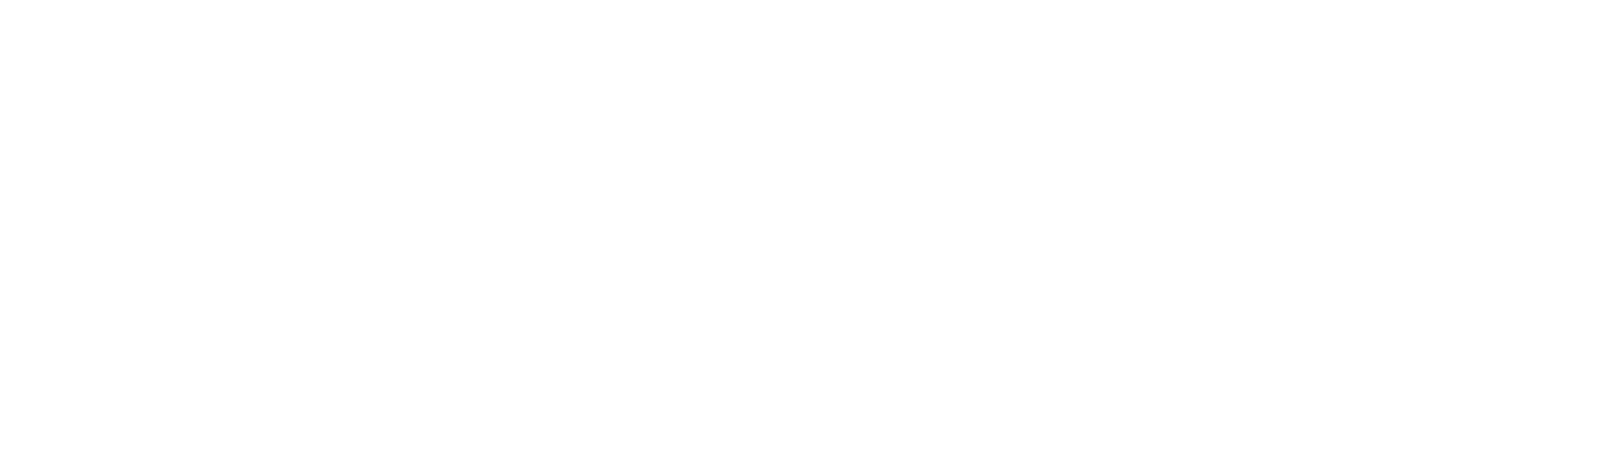 Harrison Media